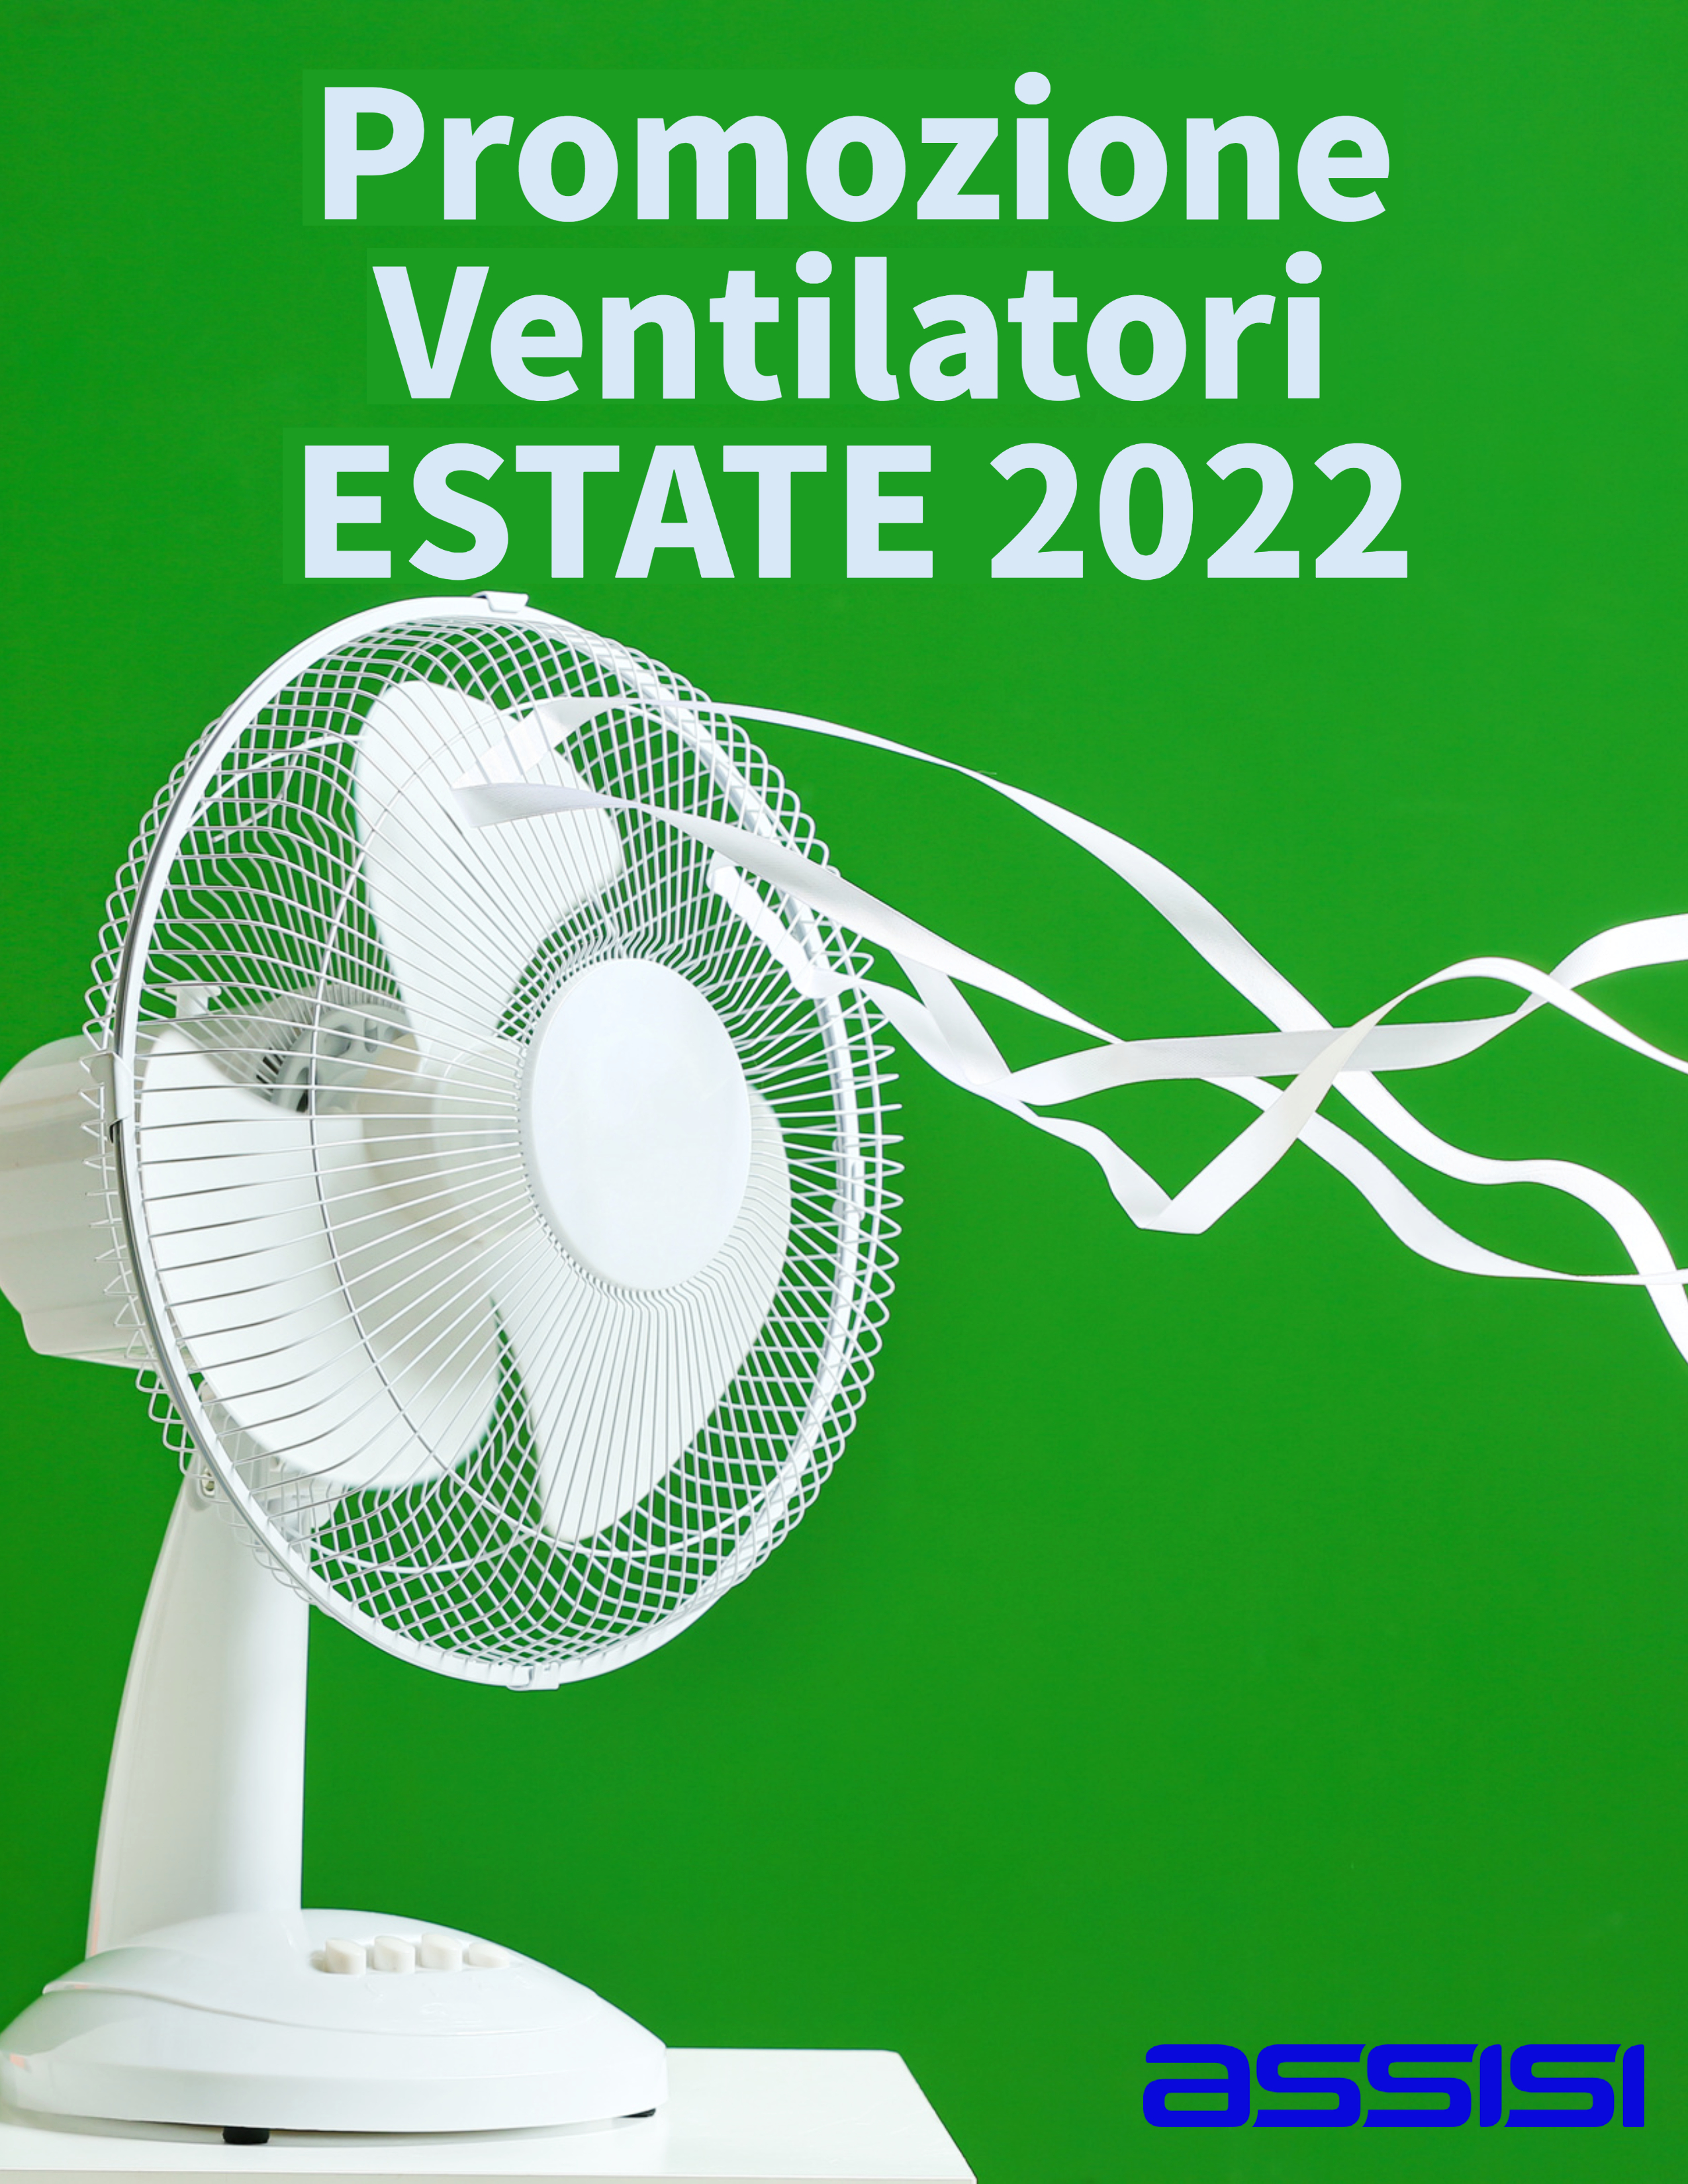 Ventilatori Promo 2022